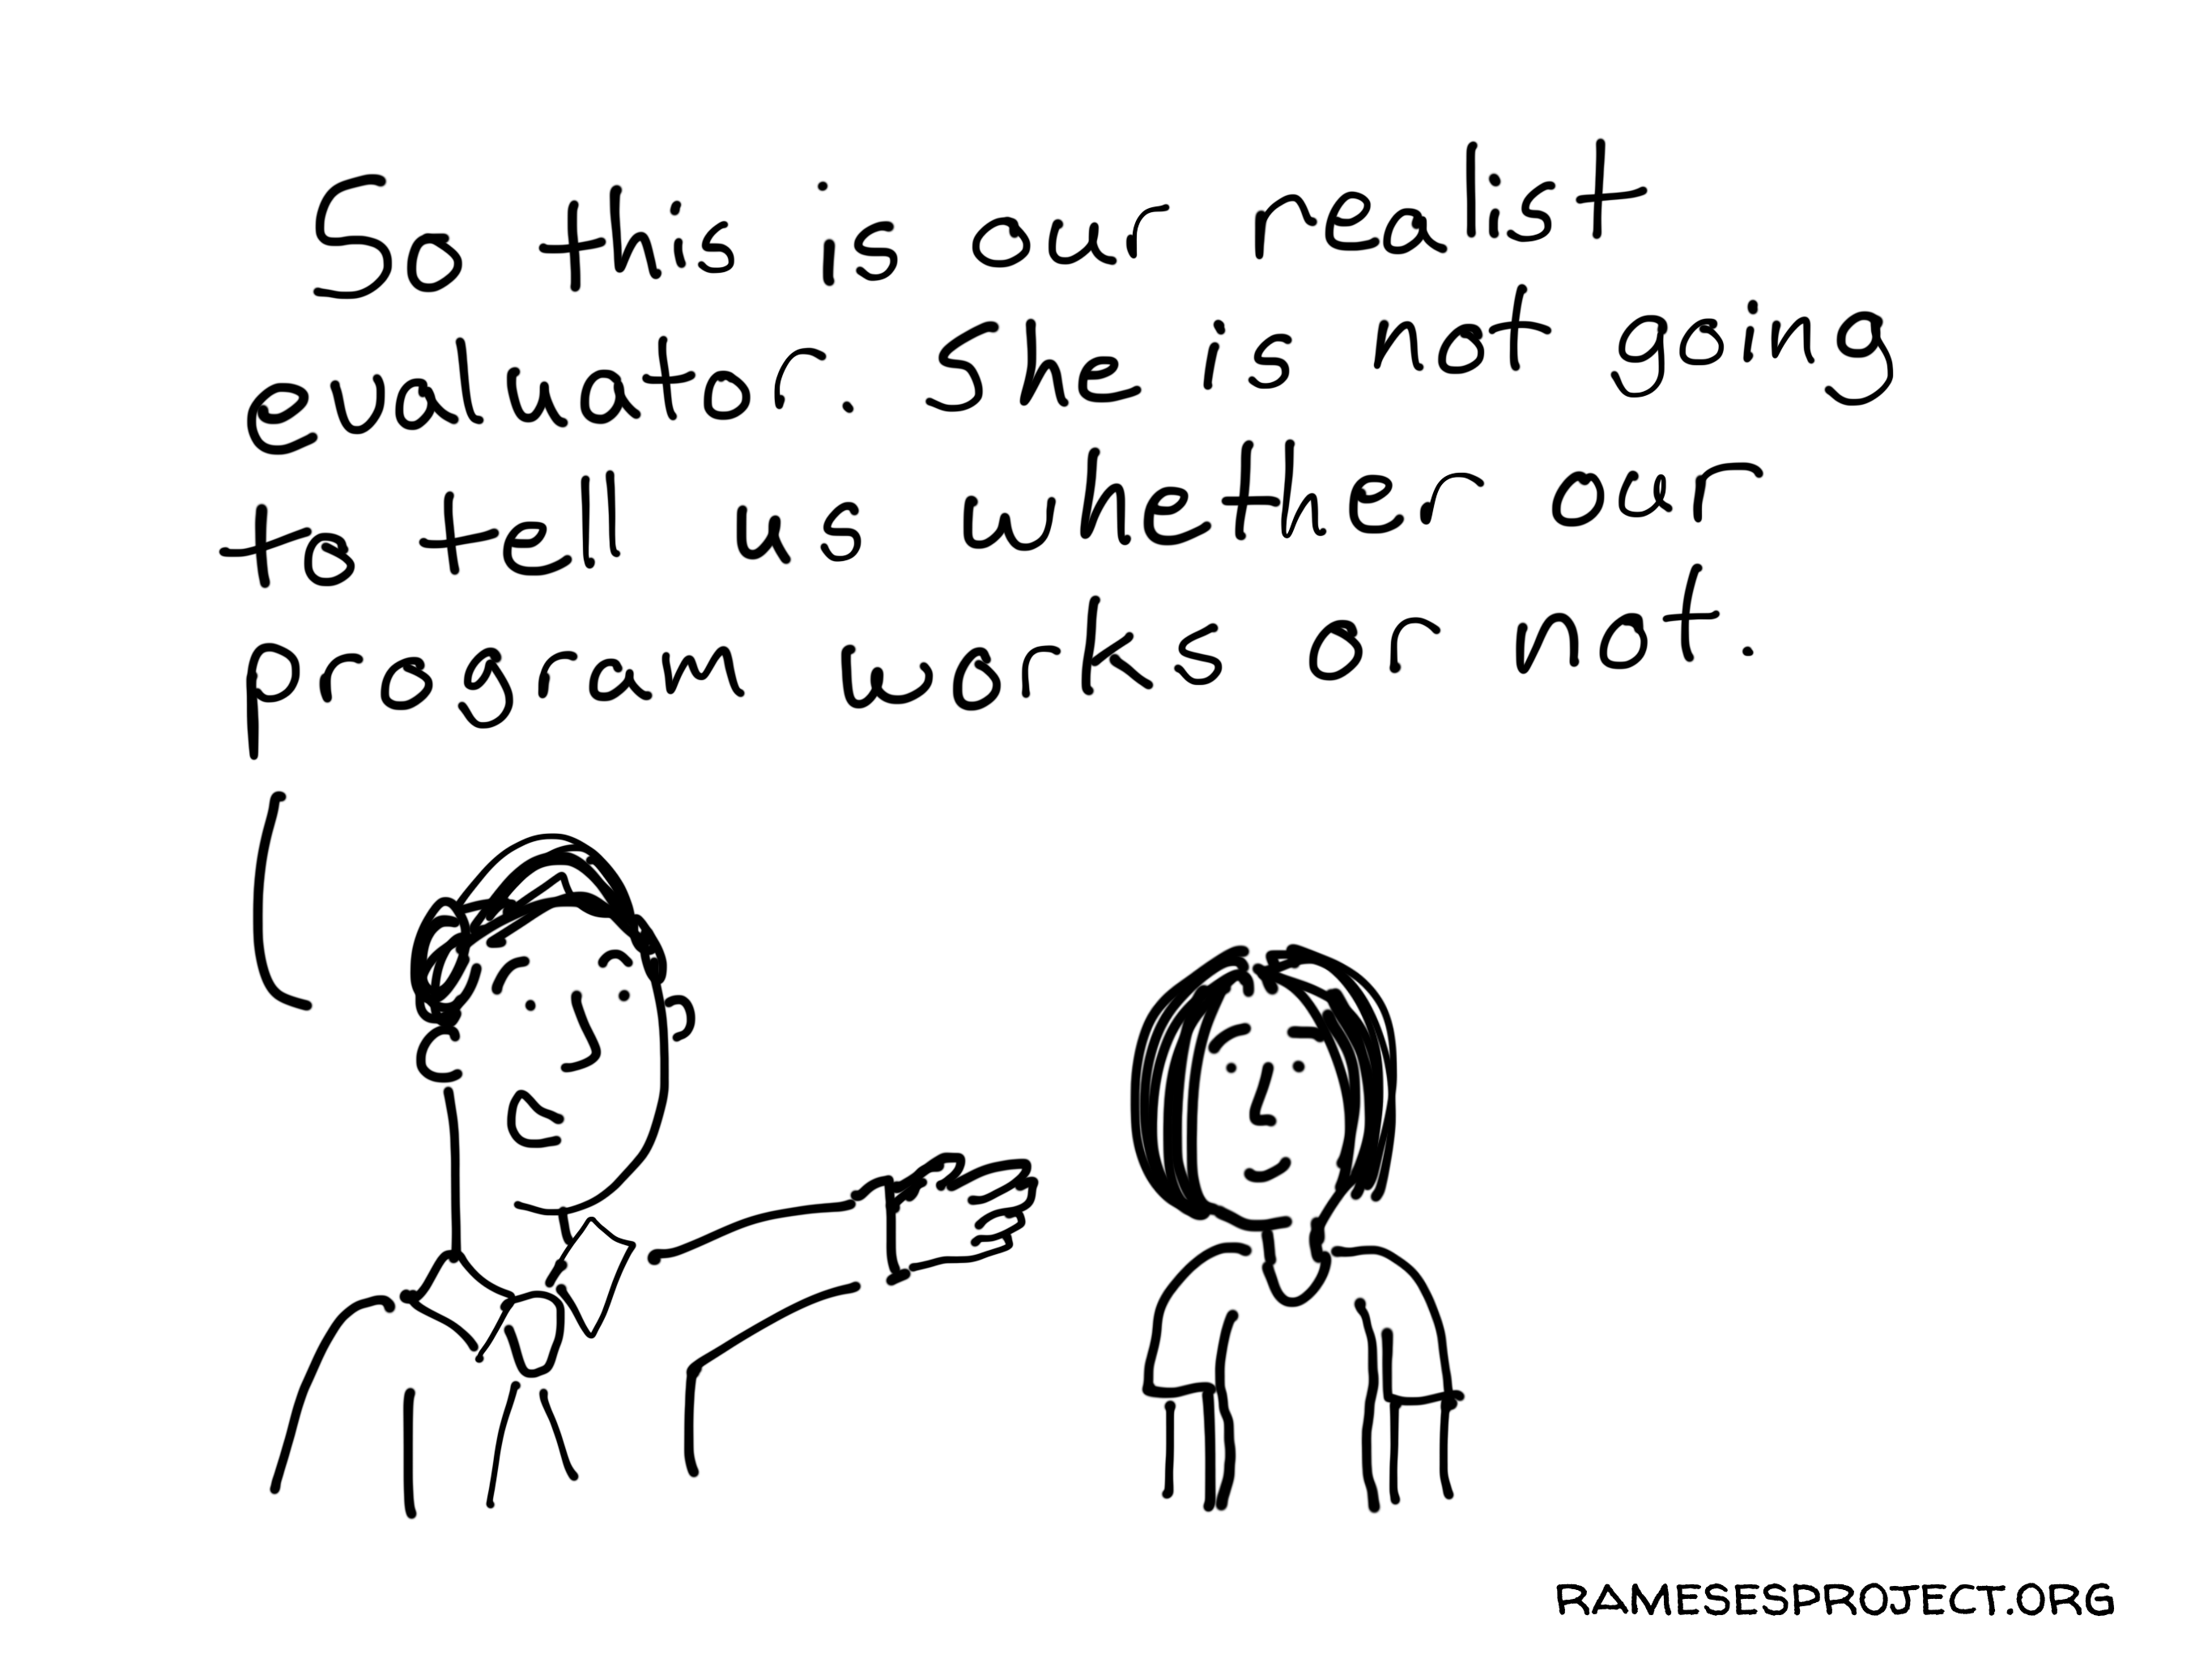 A realist evaluation cartoon by Chris Lysy.